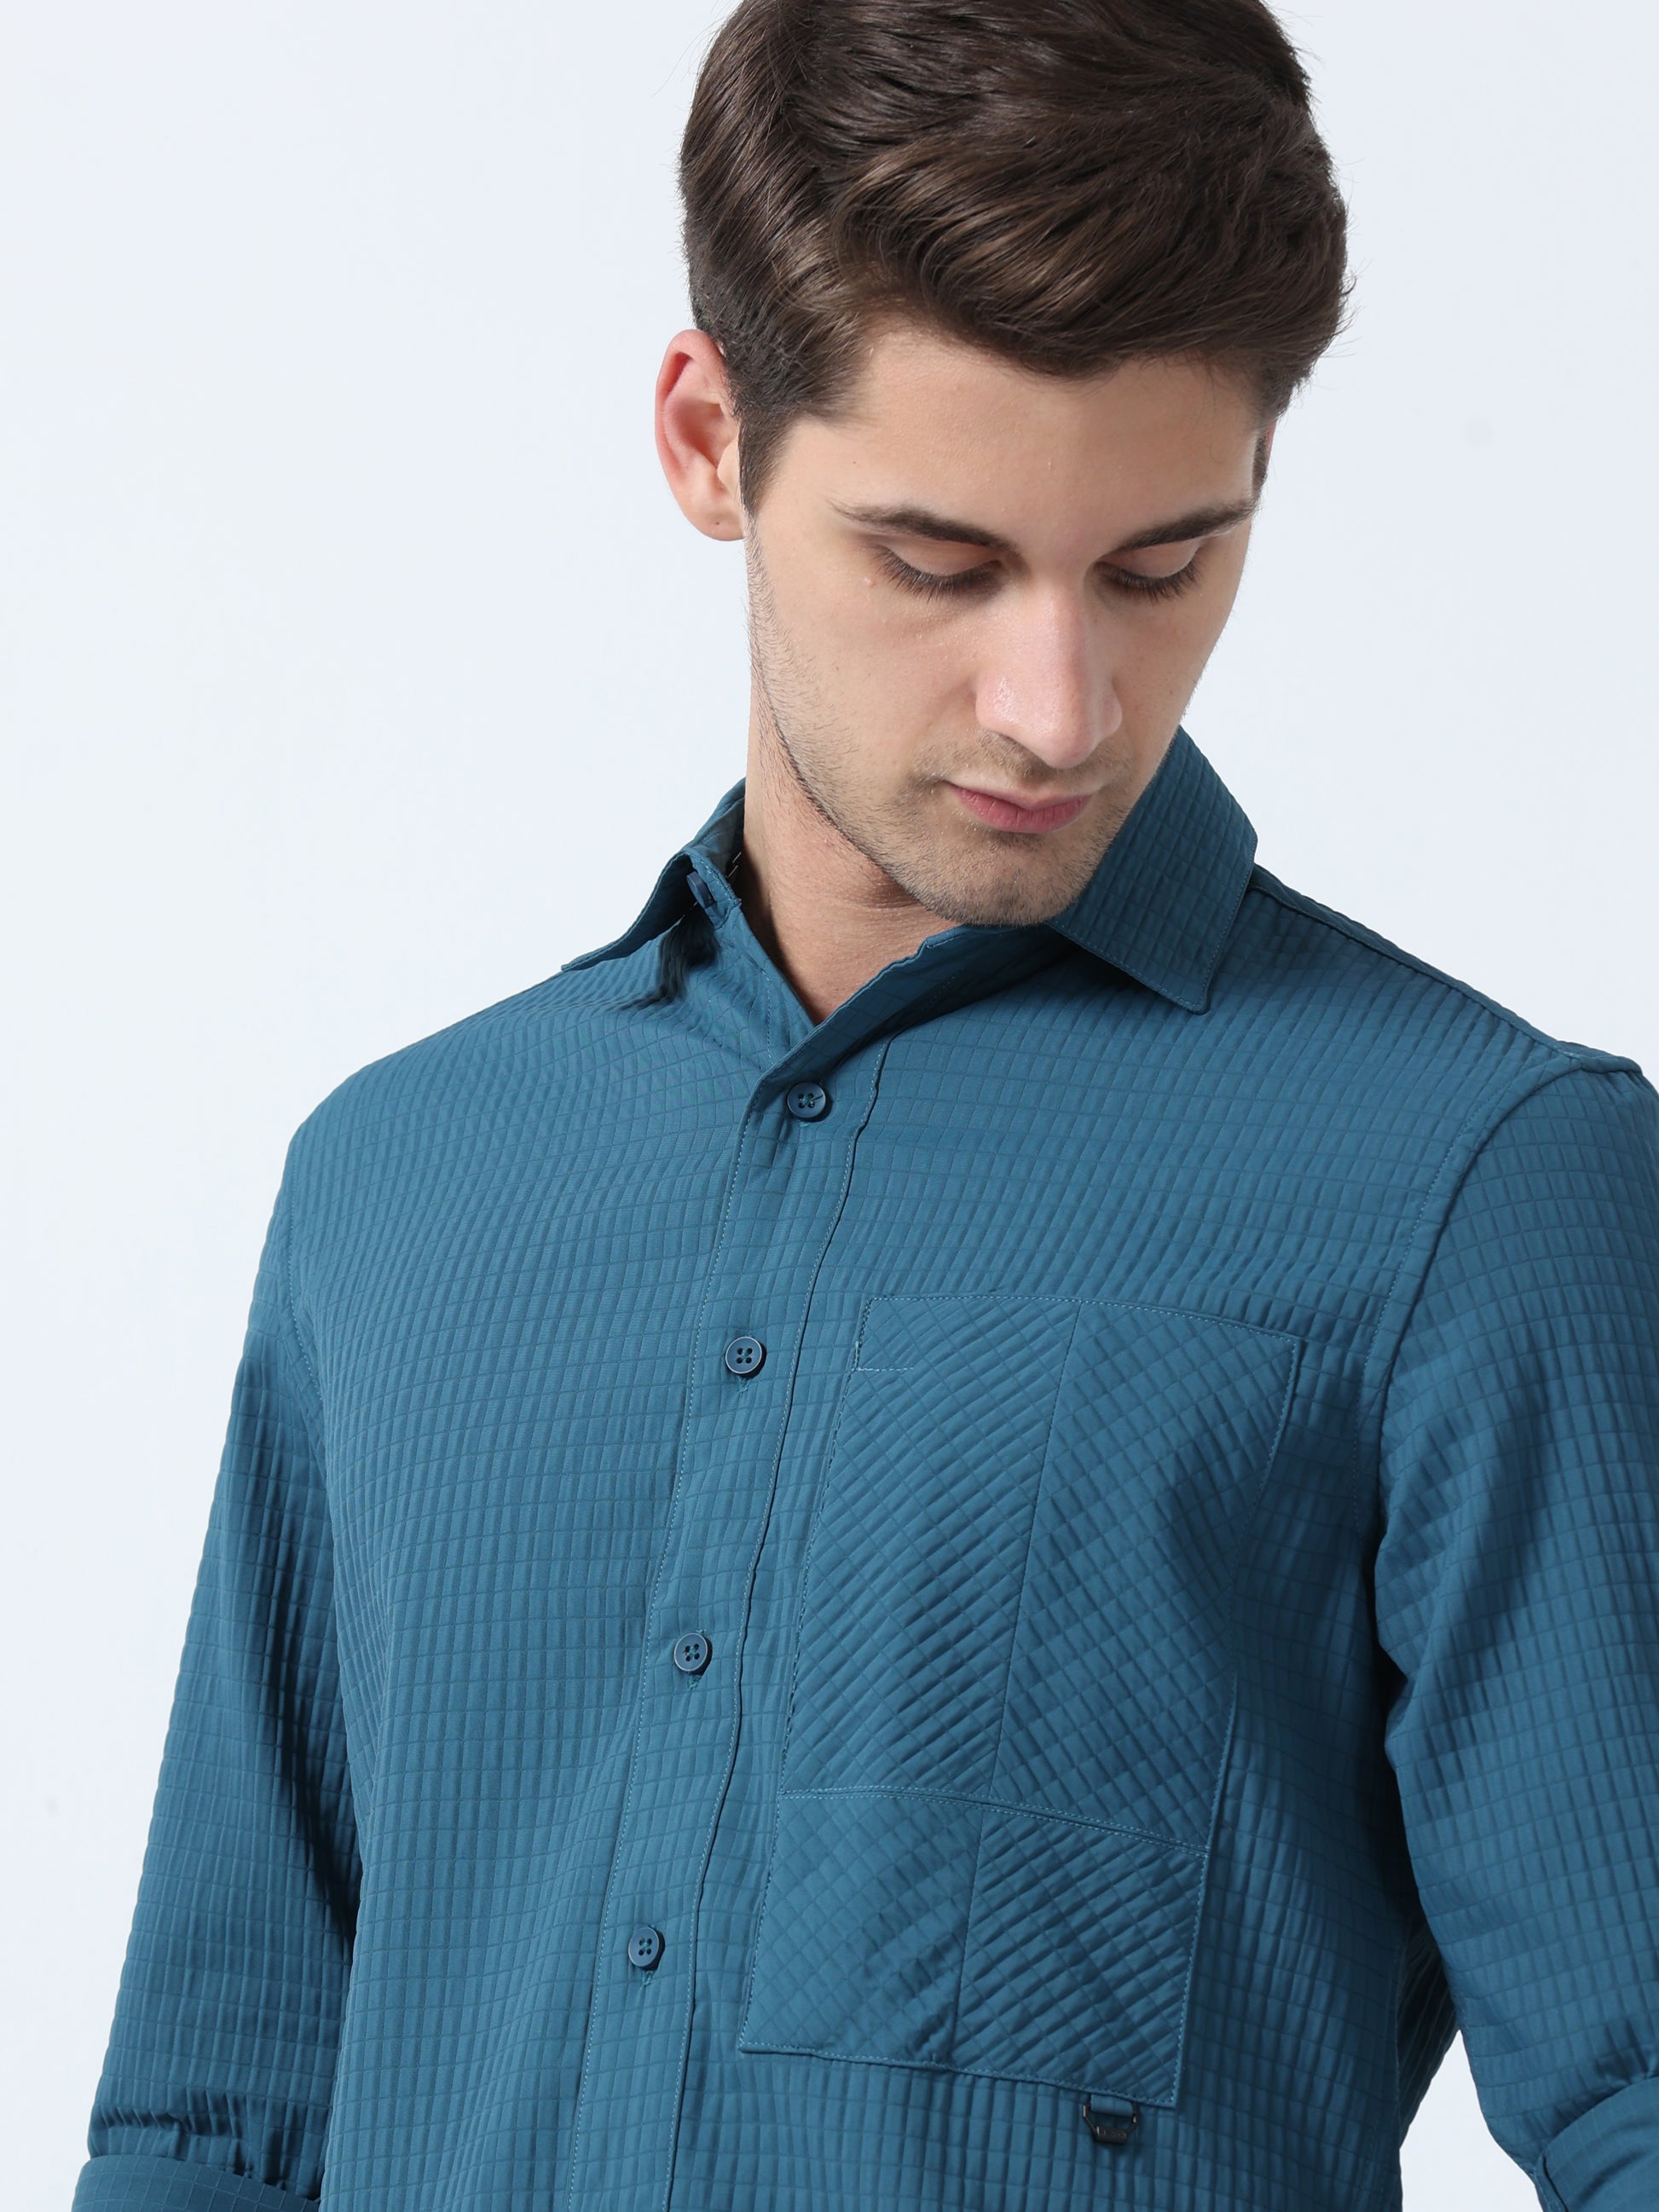 Teal Imported Fabric Full Sleeve Men's Plain Shirt